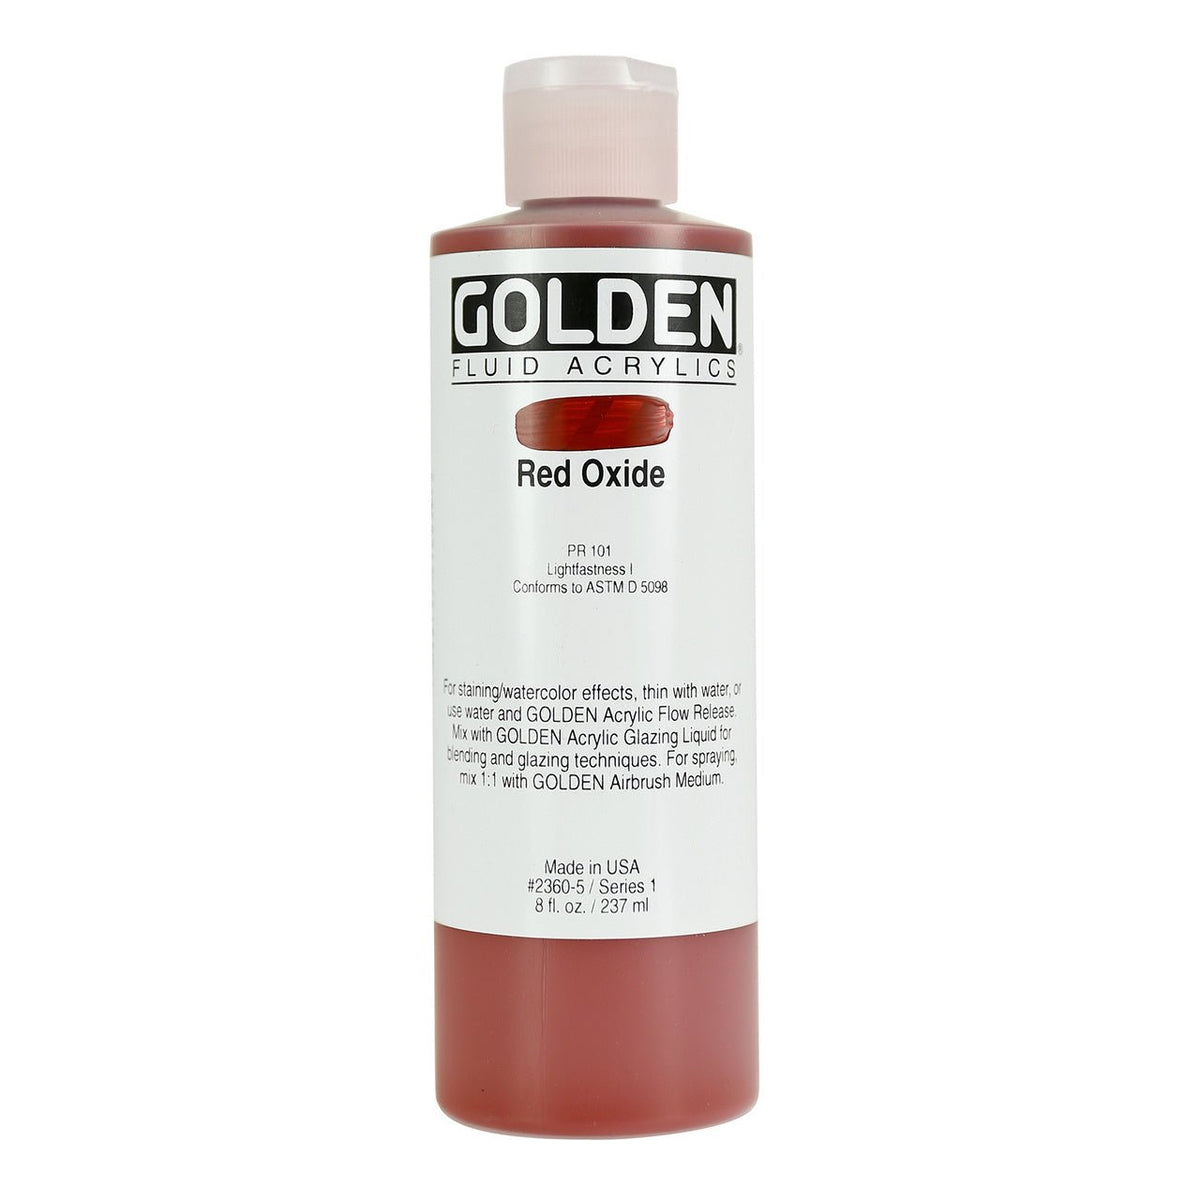 Golden Fluid Acrylic Red Oxide 8 oz - merriartist.com